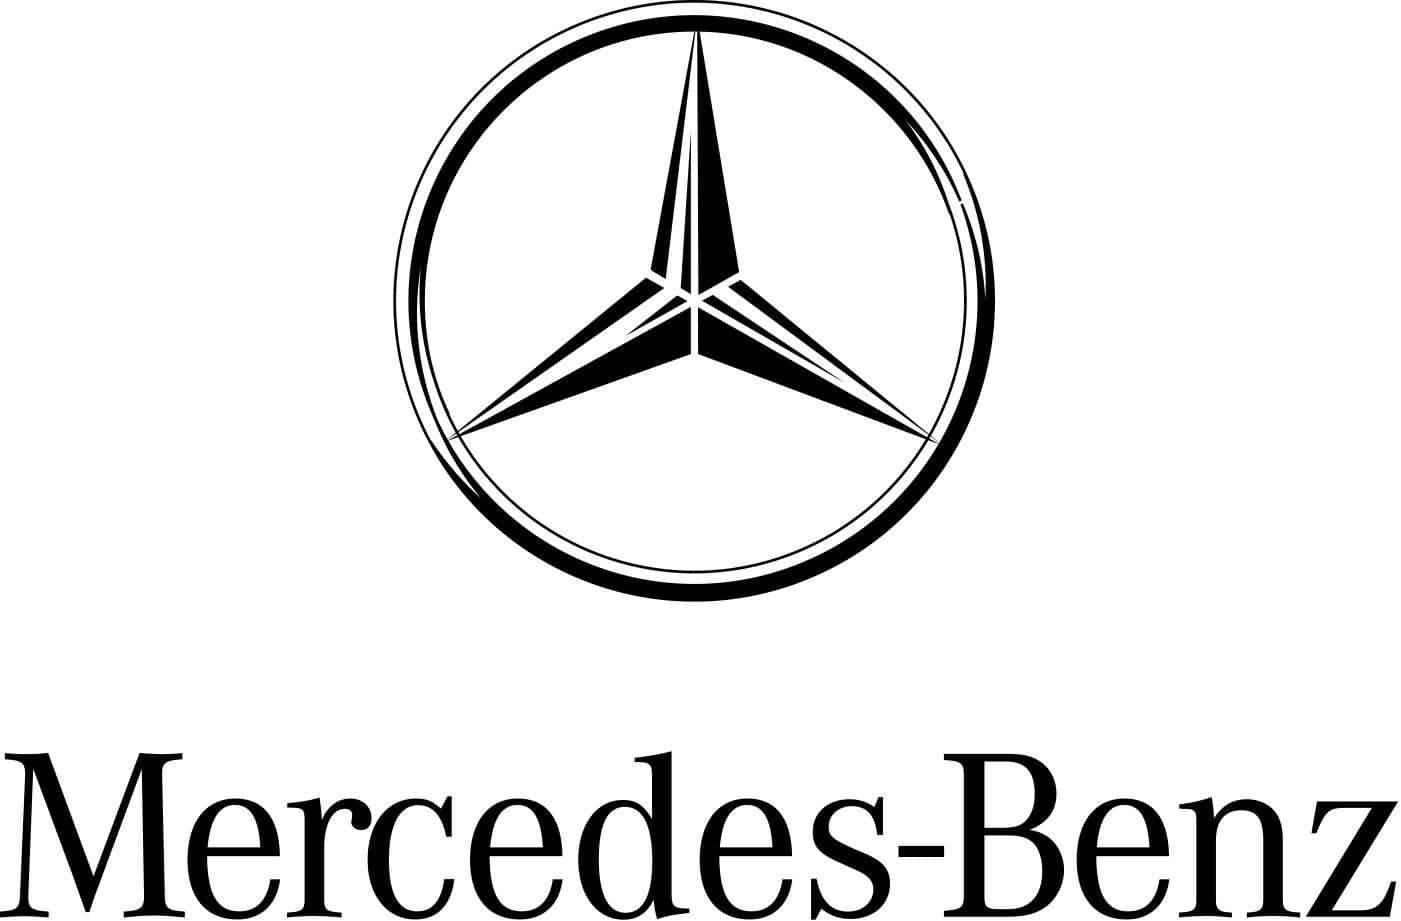 Official Mercedes Benz Logo